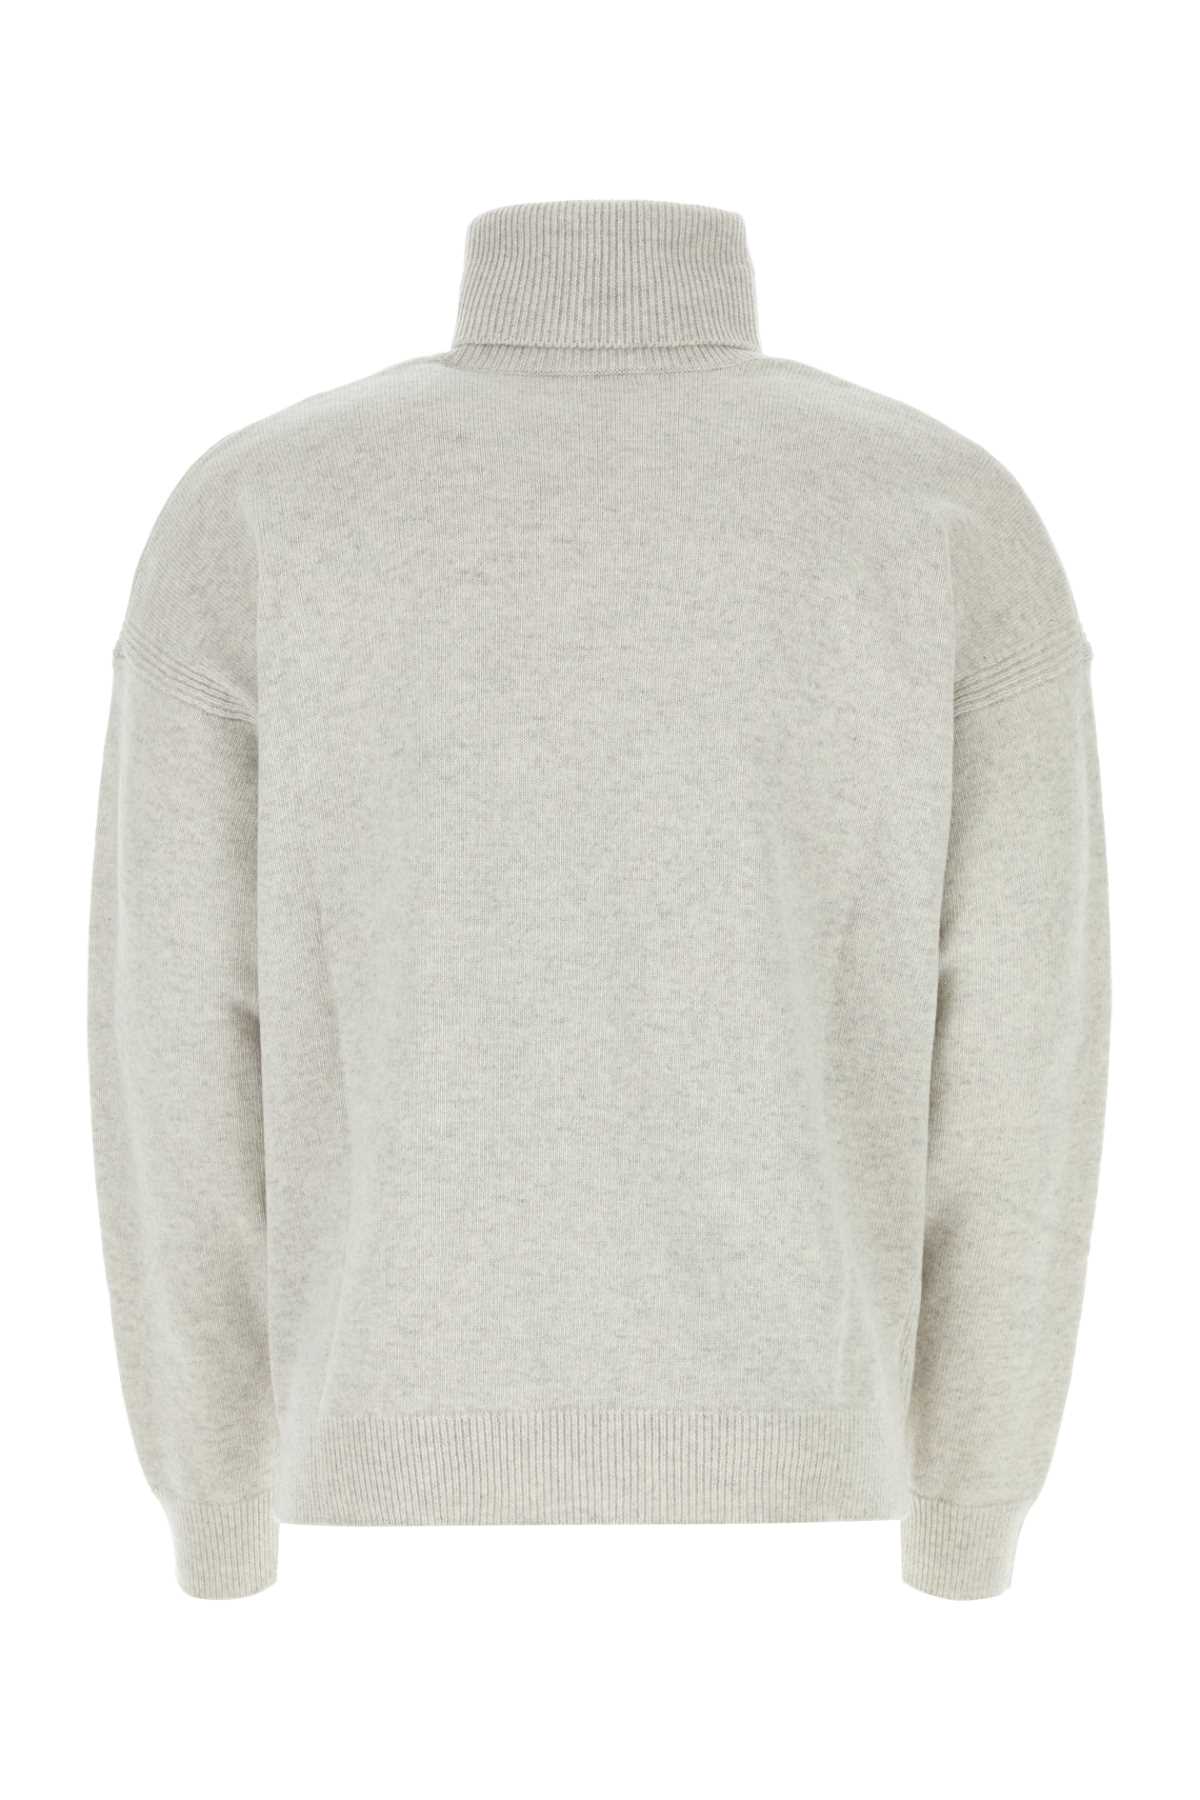 Maison Kitsuné Light Grey Wool Sweater In Light Grey Melange